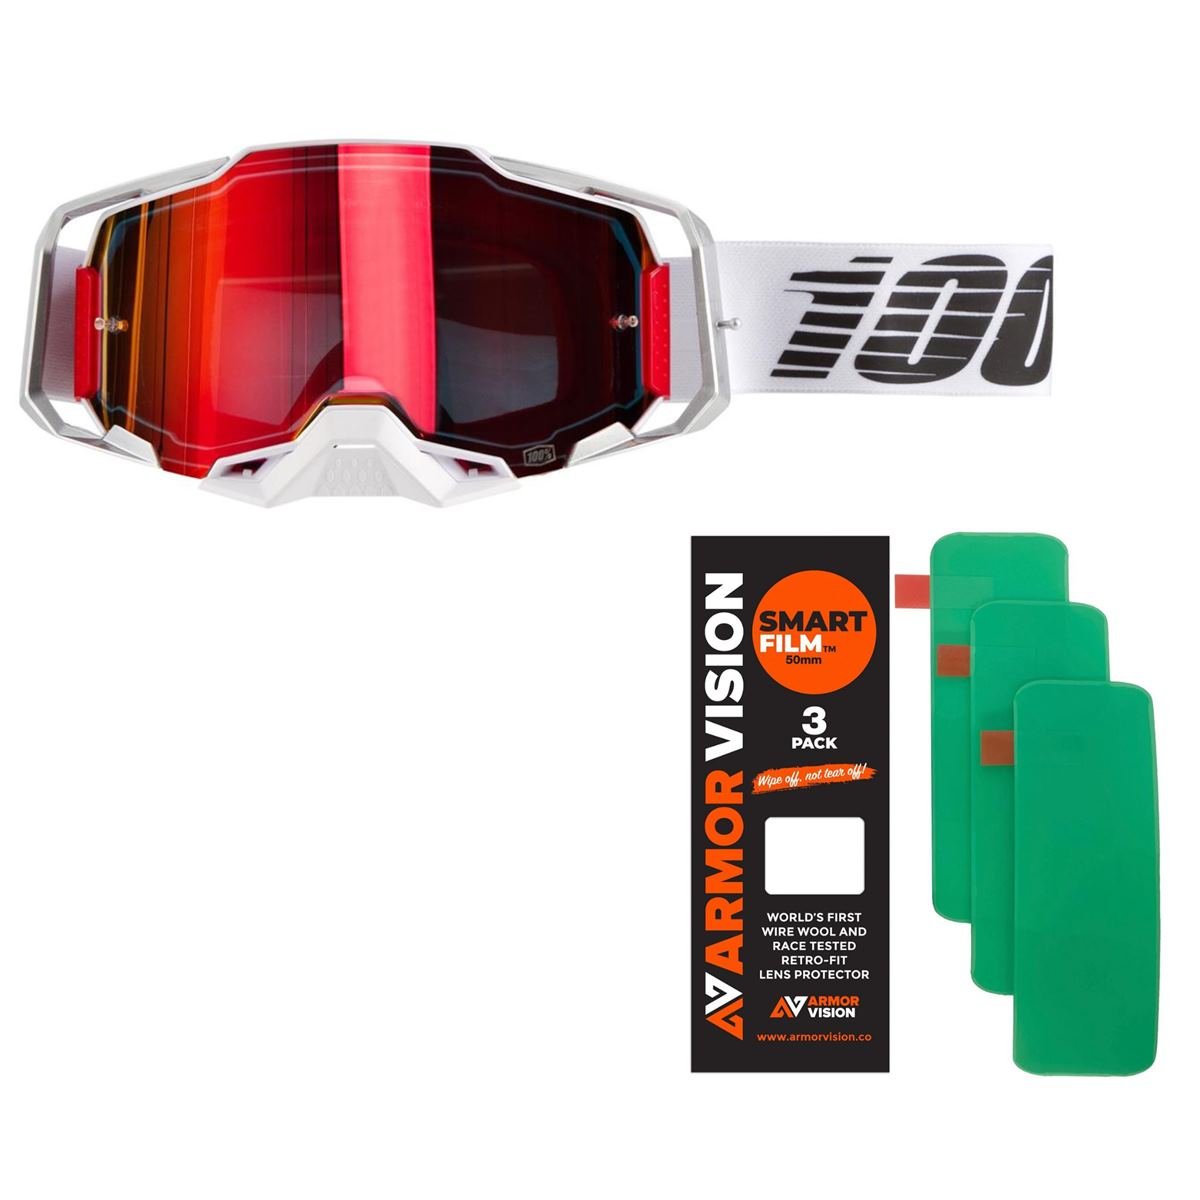 100% Goggle Armega / Armor Vision Set: 2 pieces, Lightsaber - Mirror + Smart Film Lens Protector